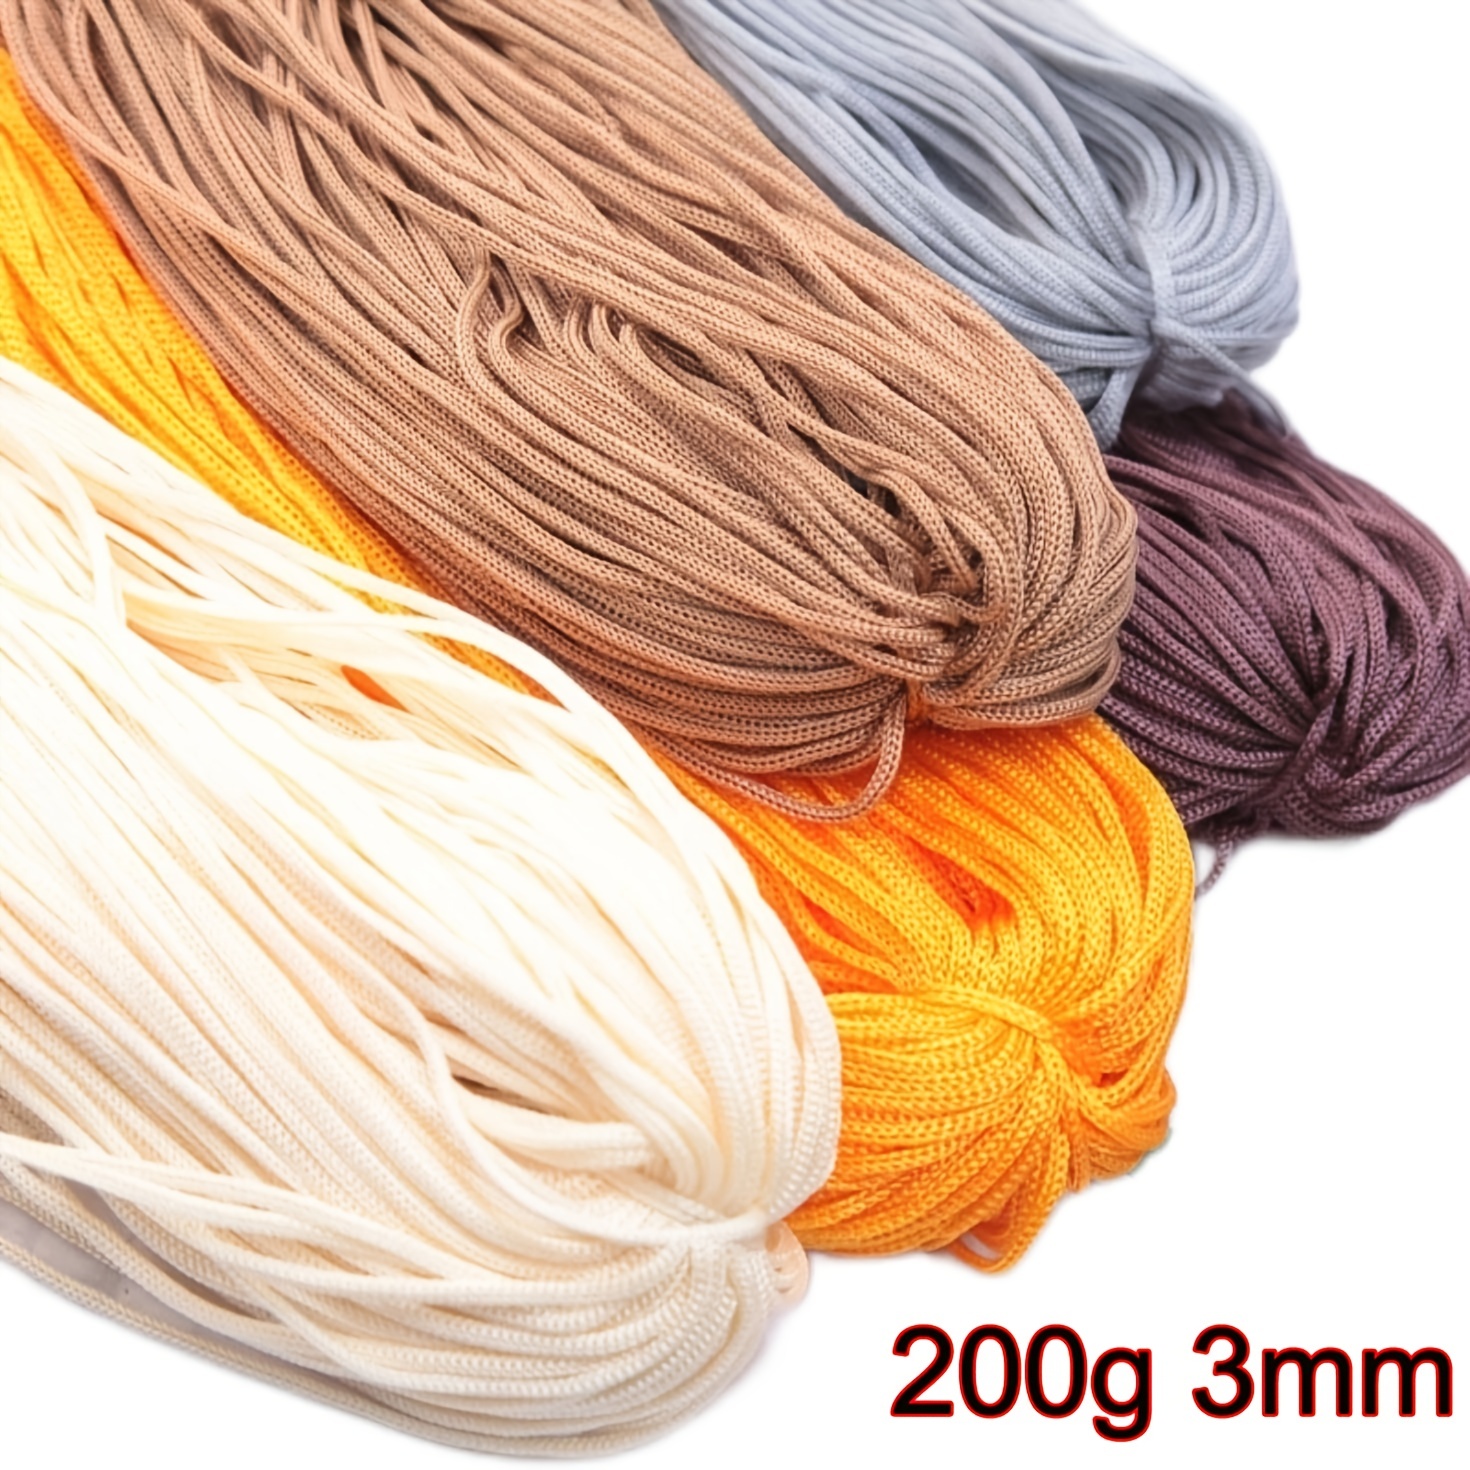 

1pc Crocheting Nylon Cord Knitting Hollow Yarn Thread Crochet Line For Diy Knitting And Crocheting Bracelet Mat Hat Bag Shoes Handmade Light Weight 200g 3mm